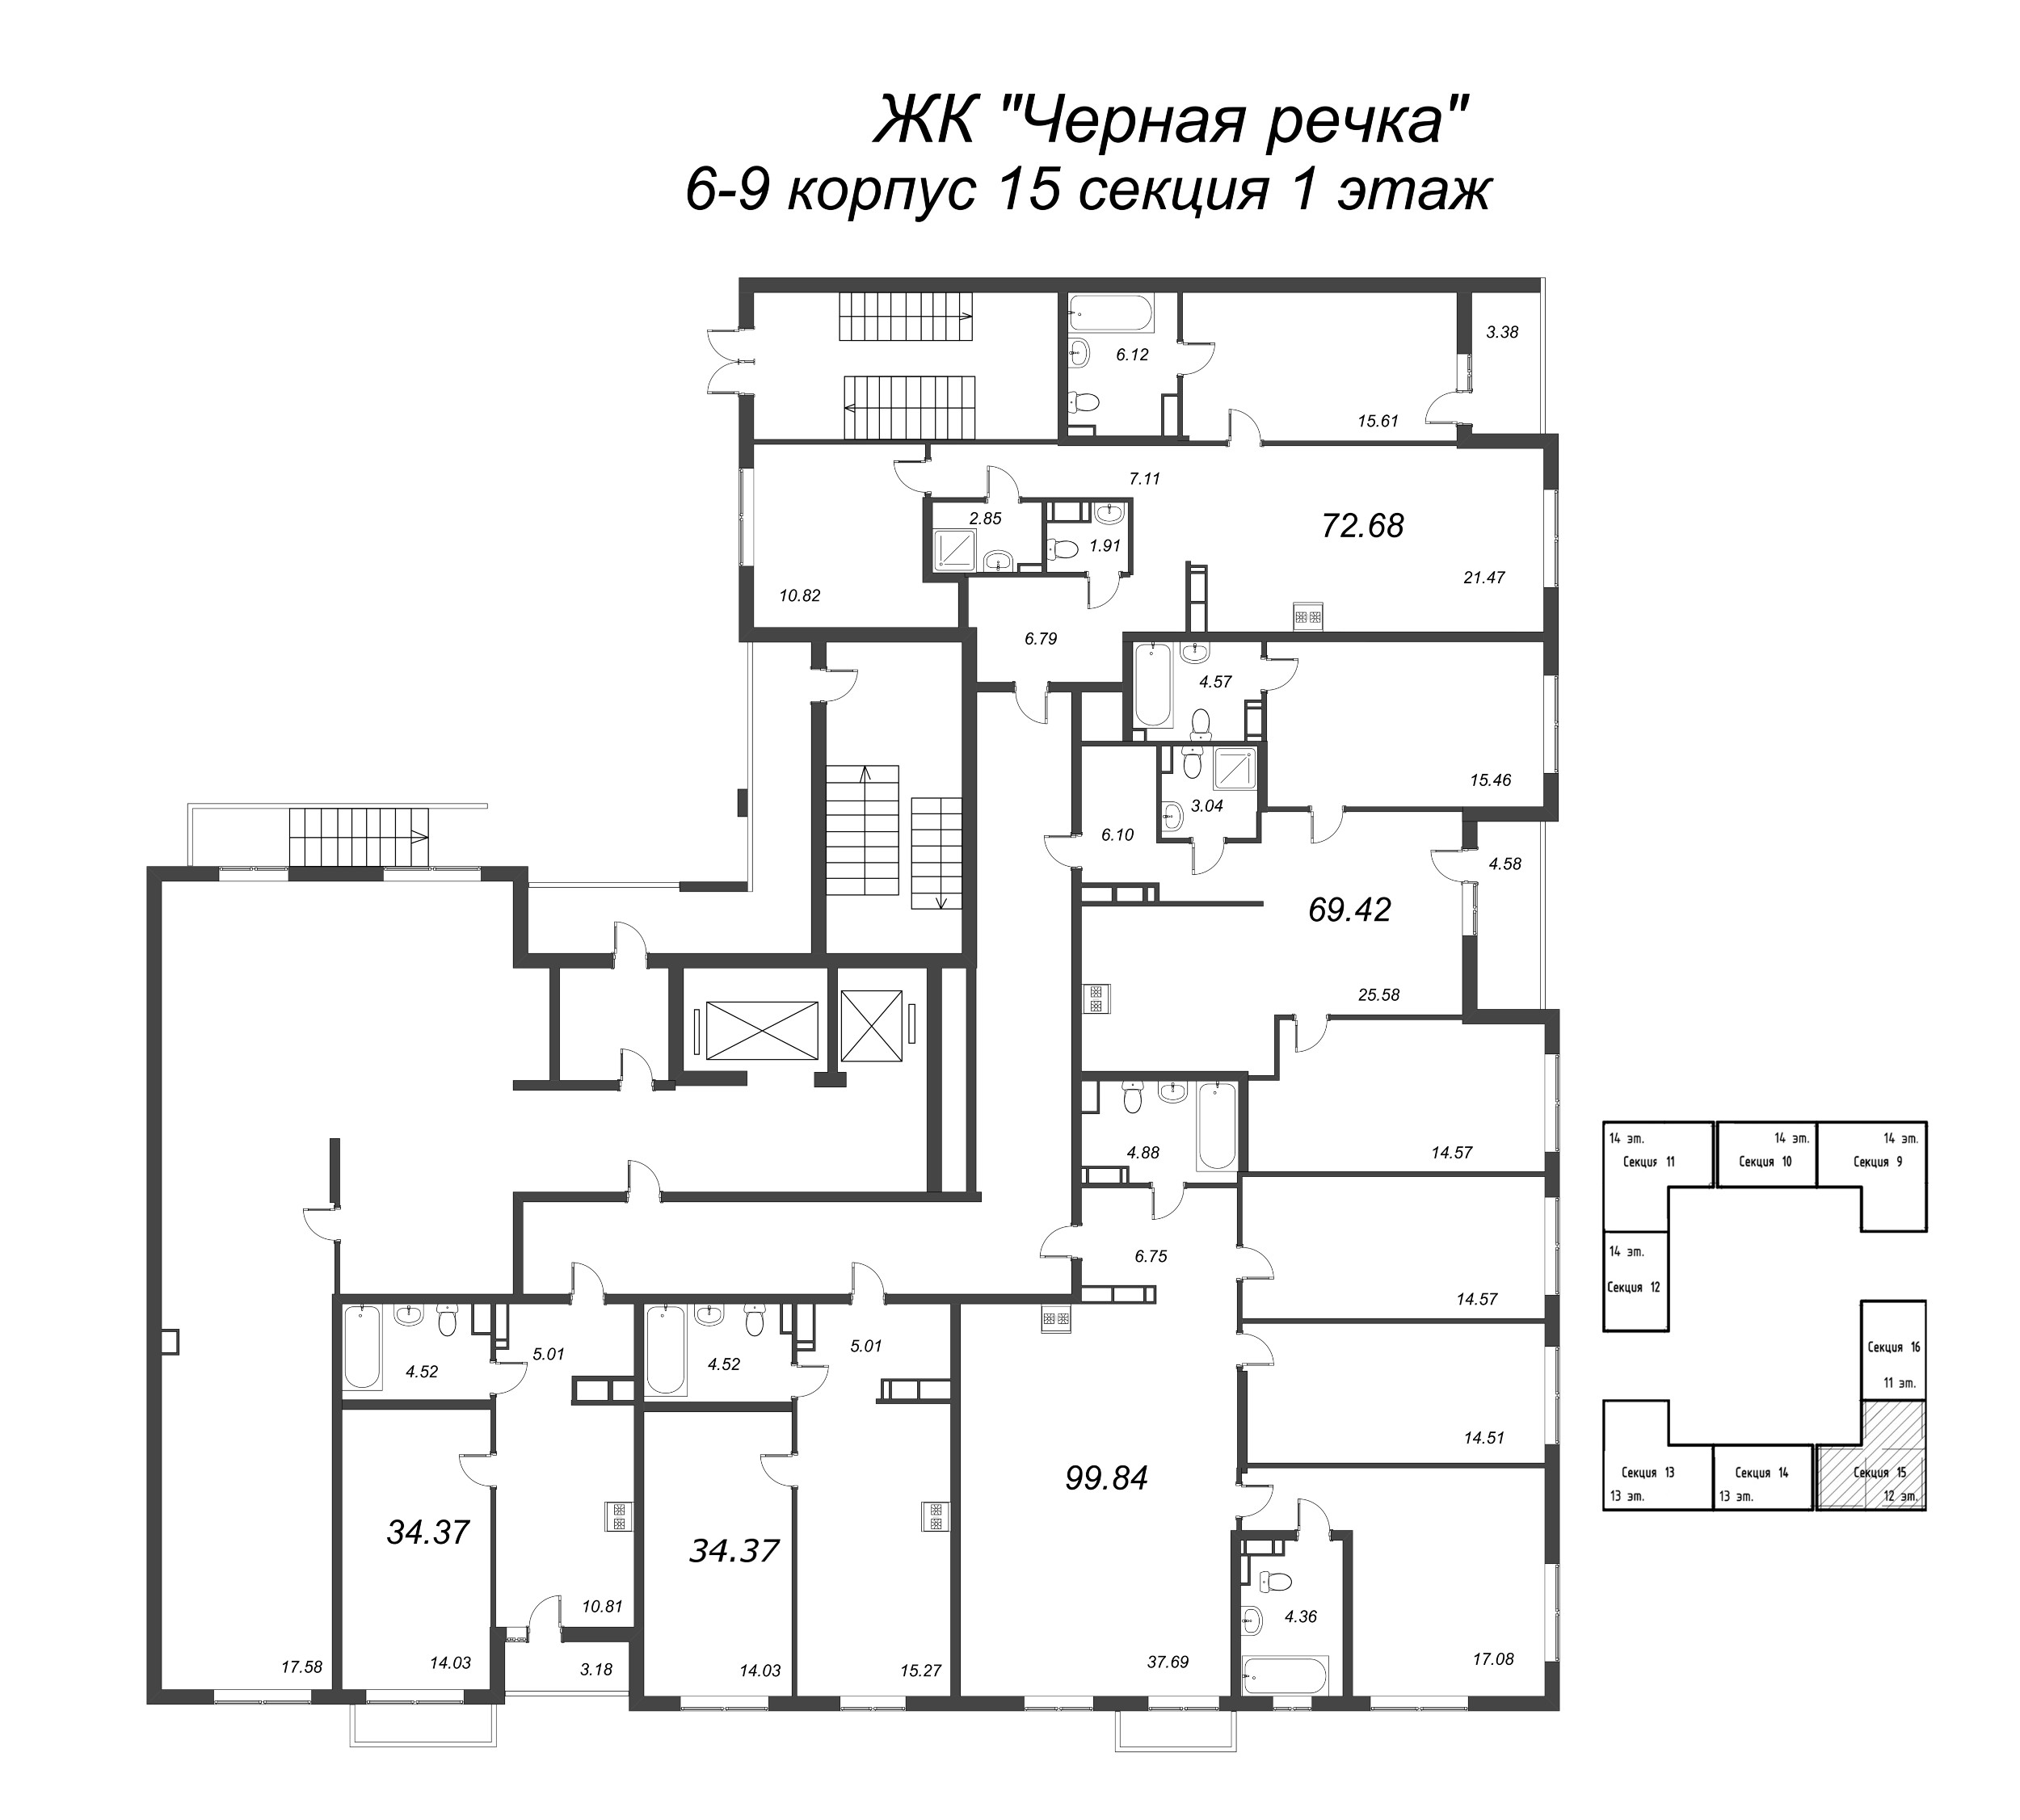 4-комнатная (Евро) квартира, 99.84 м² - планировка этажа